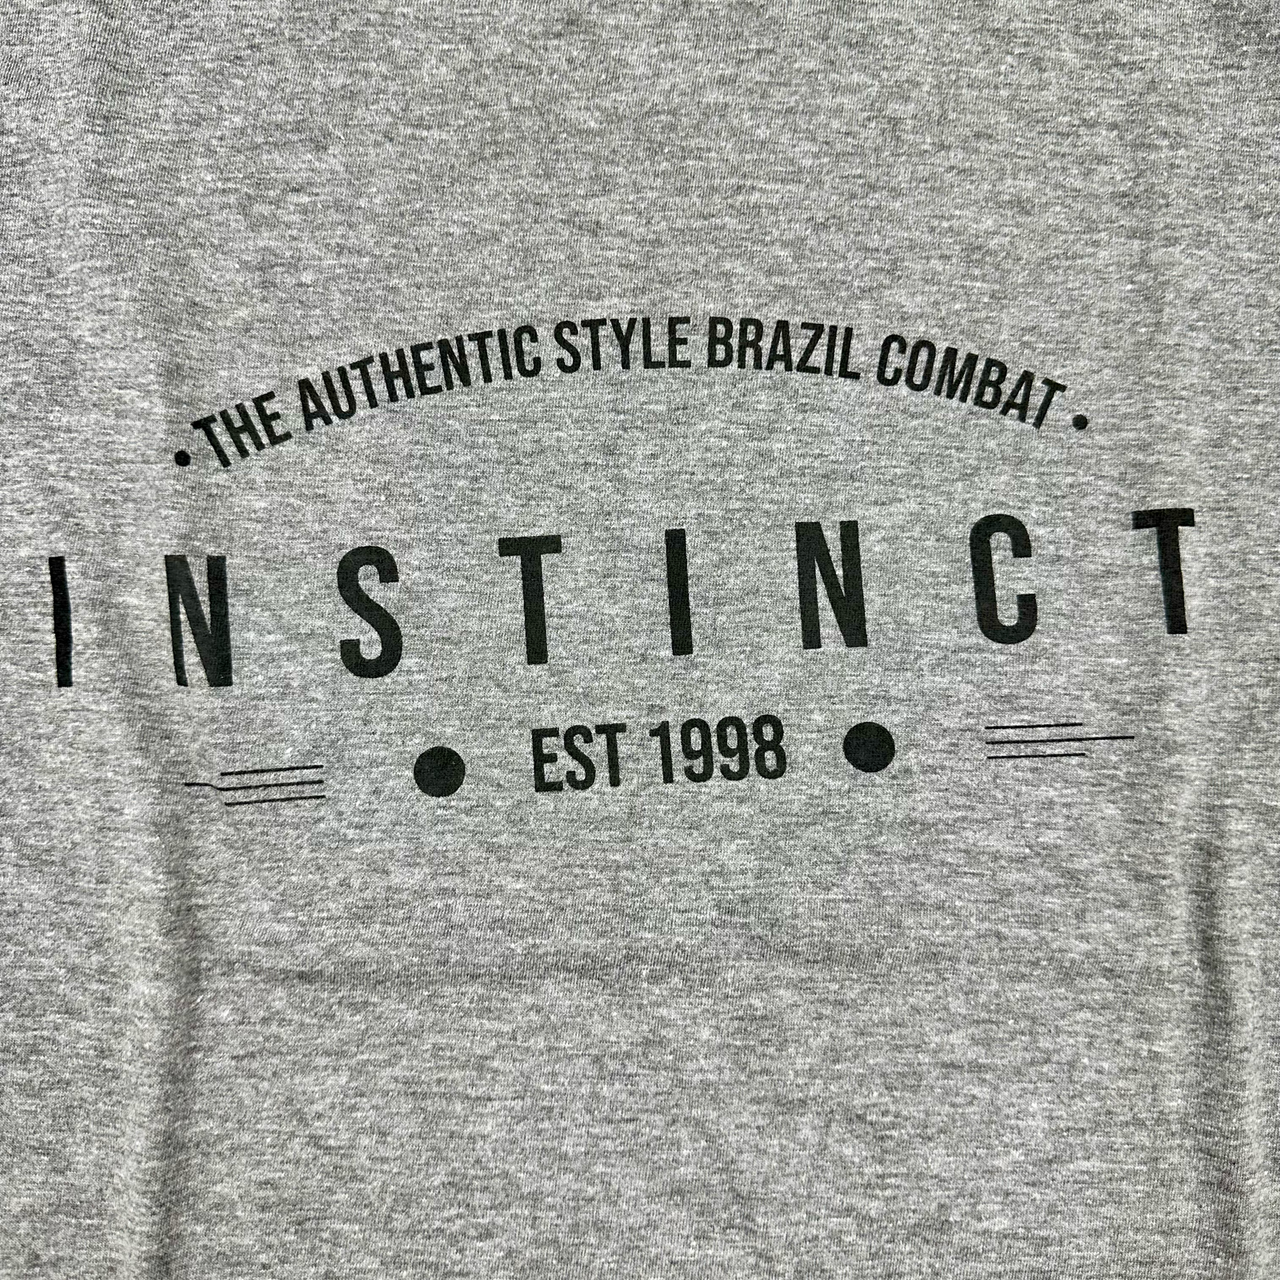 Instinct Jiu-jitsu T-shirt